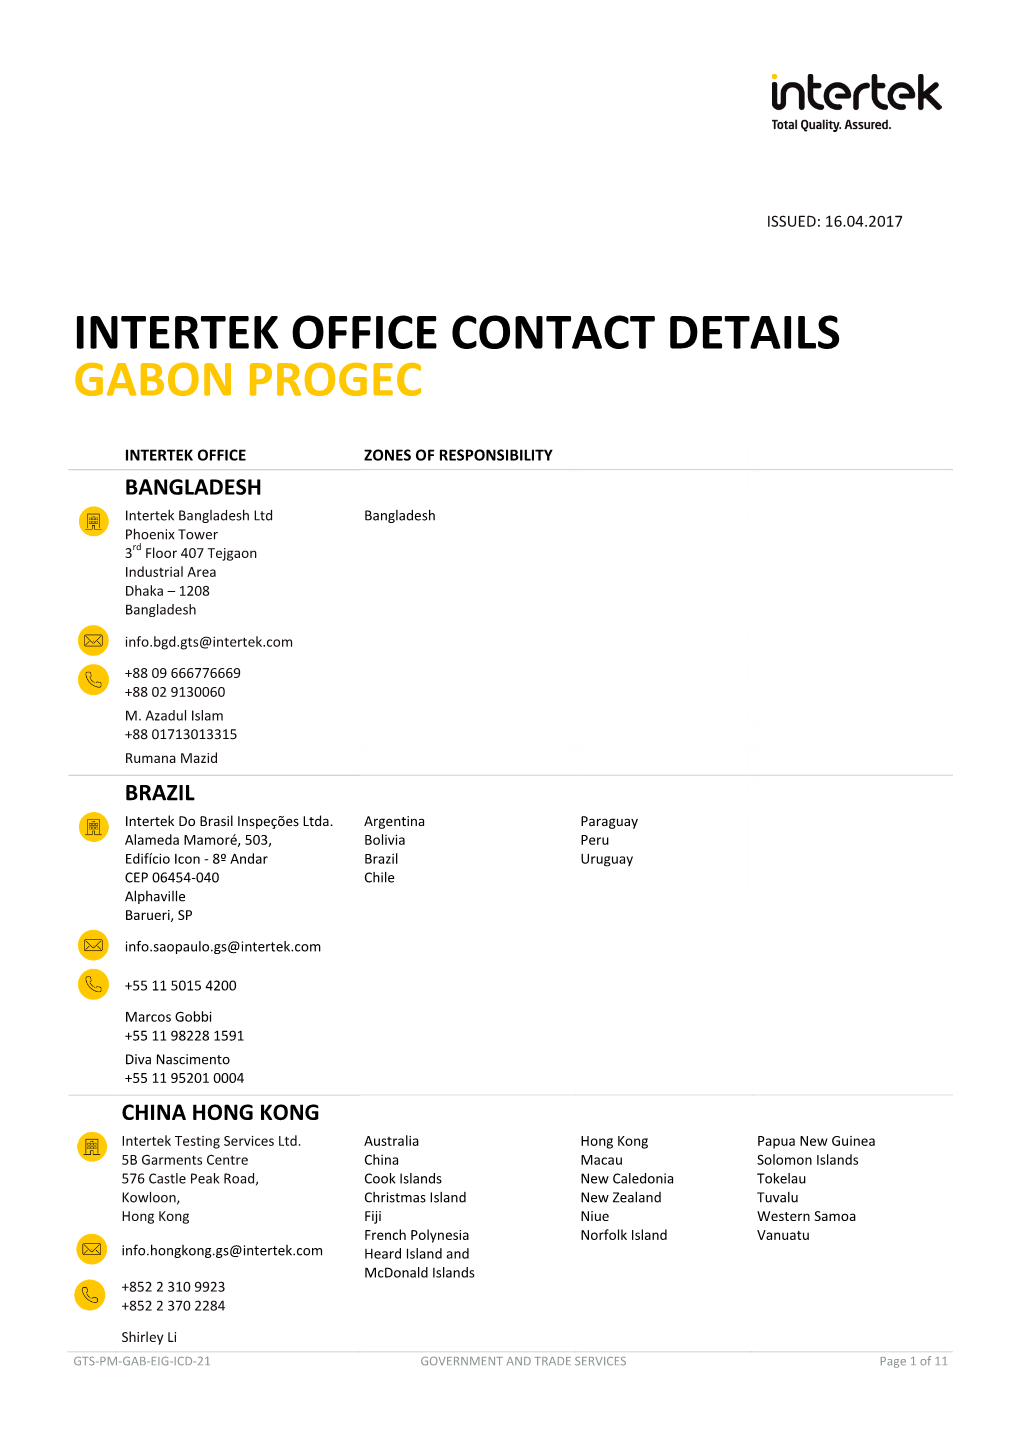 Intertek Office Contact Details Gabon Progec